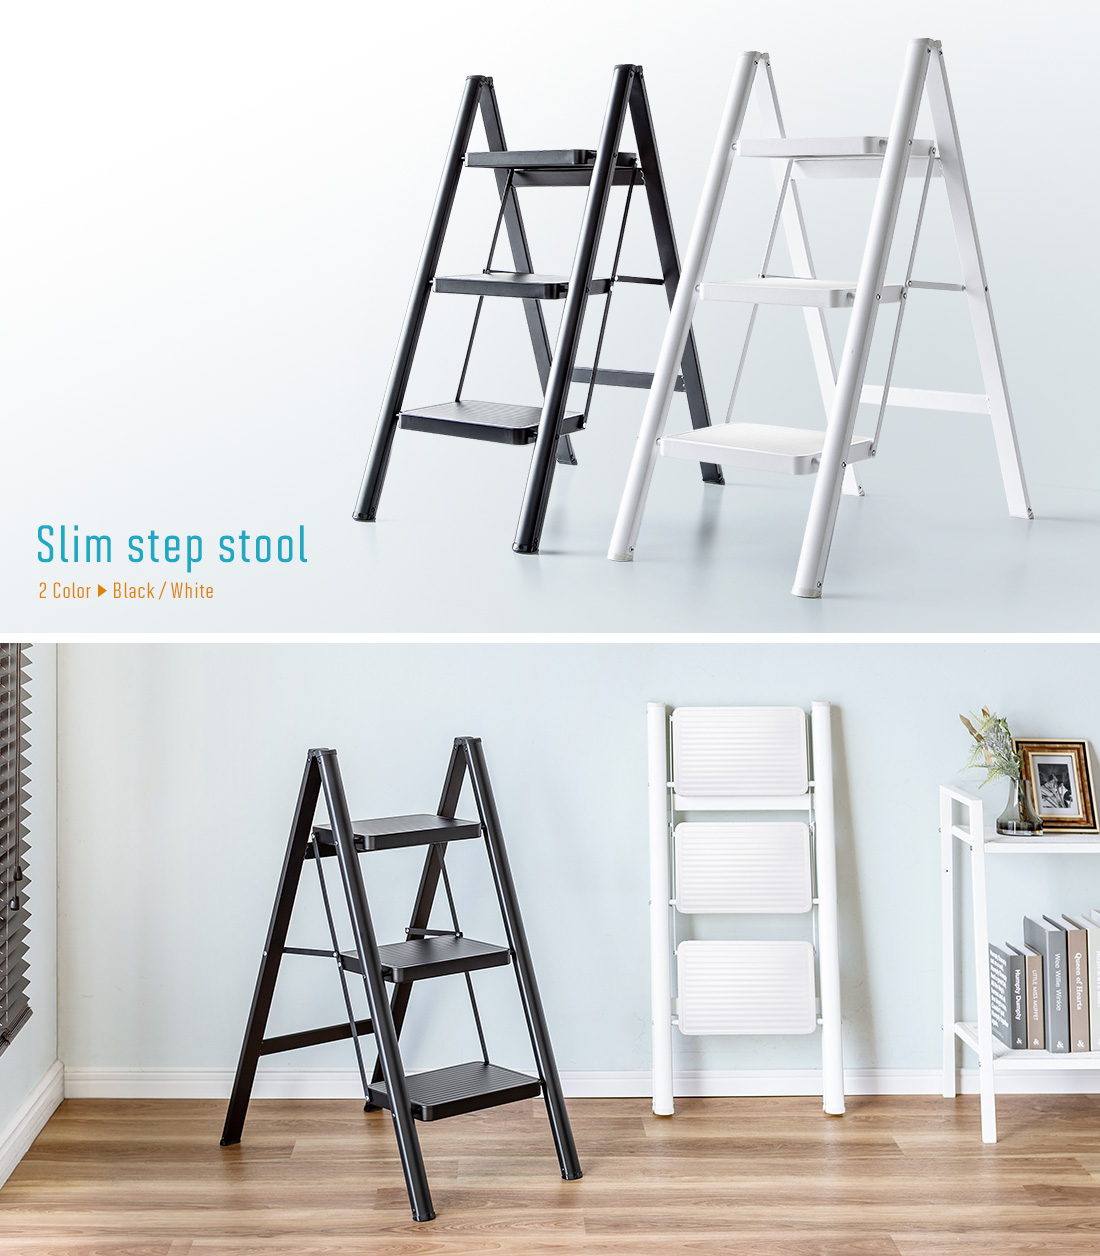 Slim step stool 2 Color▶ Black/White